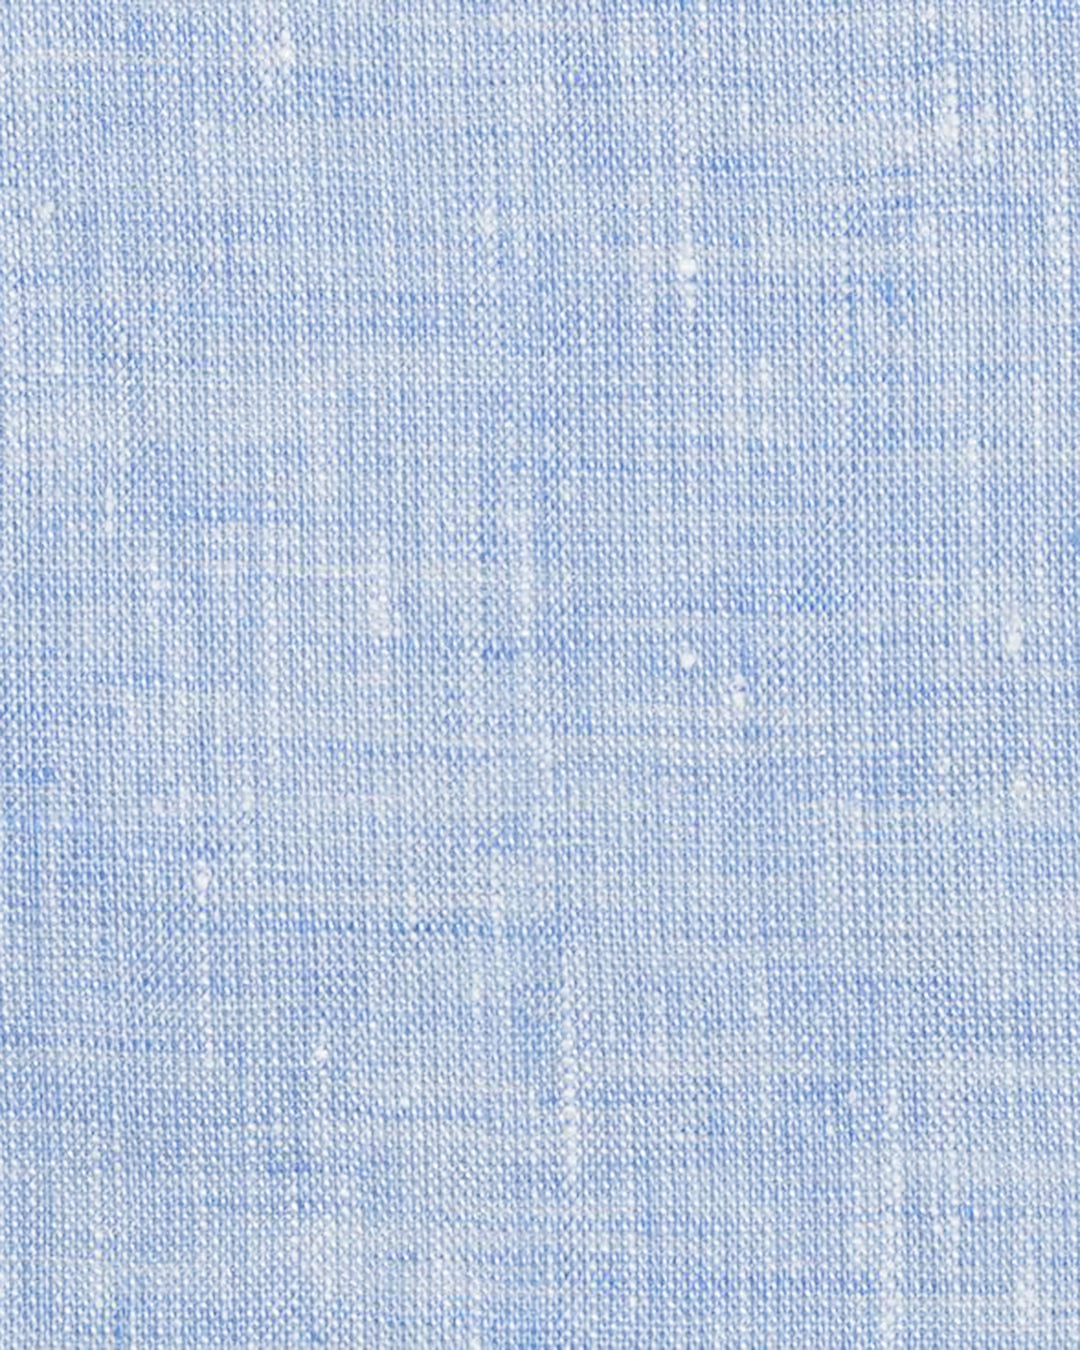 Linen 60's: Light blue